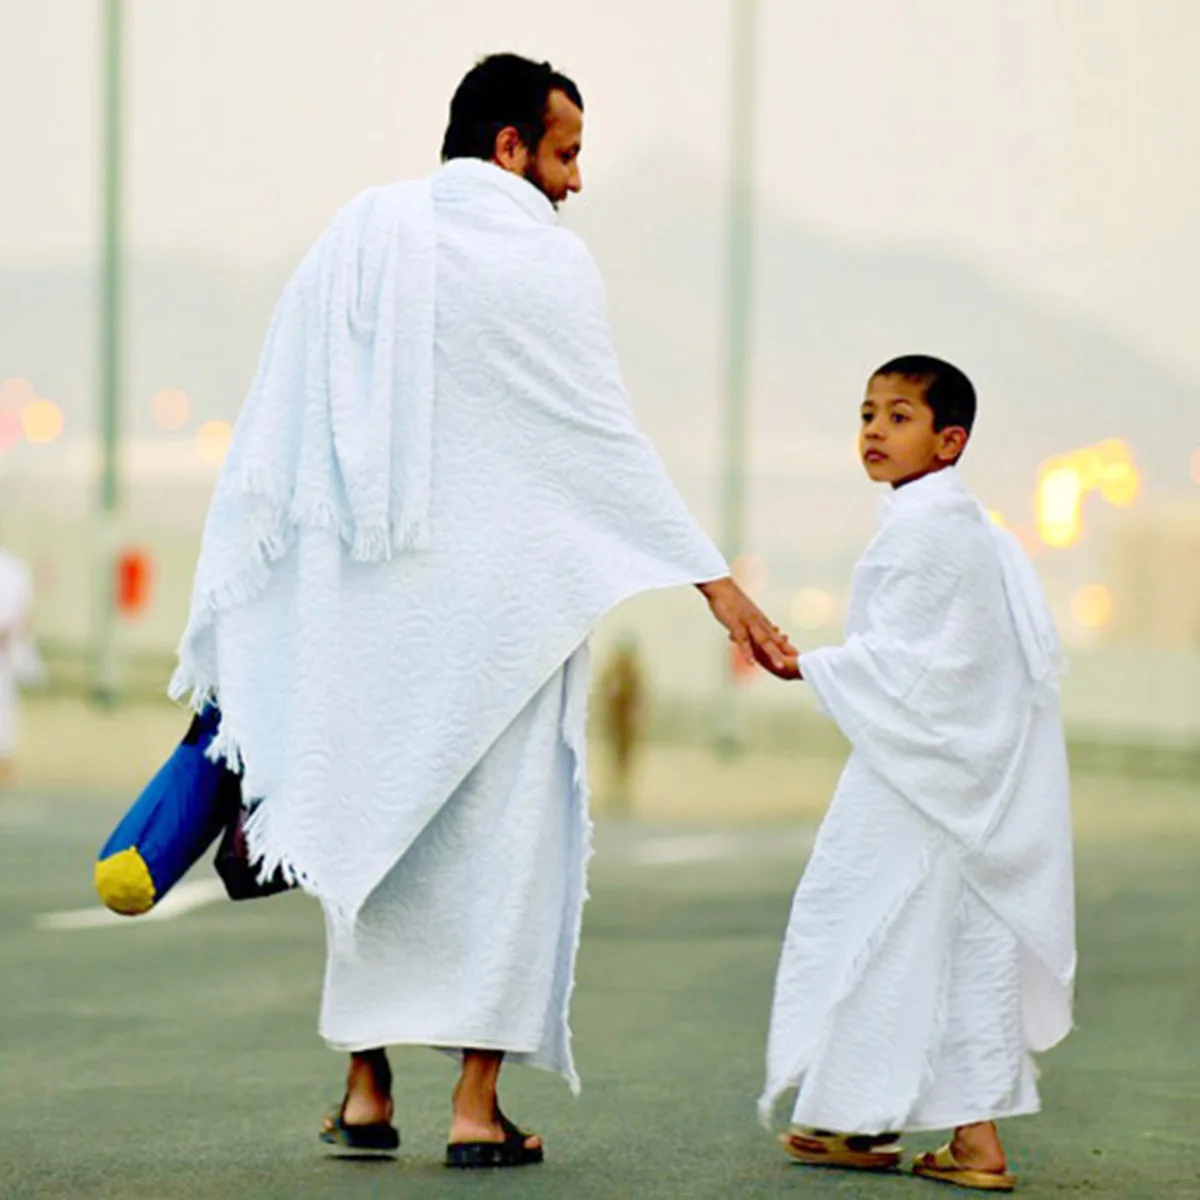 Men's Ihram Towel Set for Umrah and Hajj Muslim Pilgrimage Costumes Comfortable to wear  ملابس اسلاميه